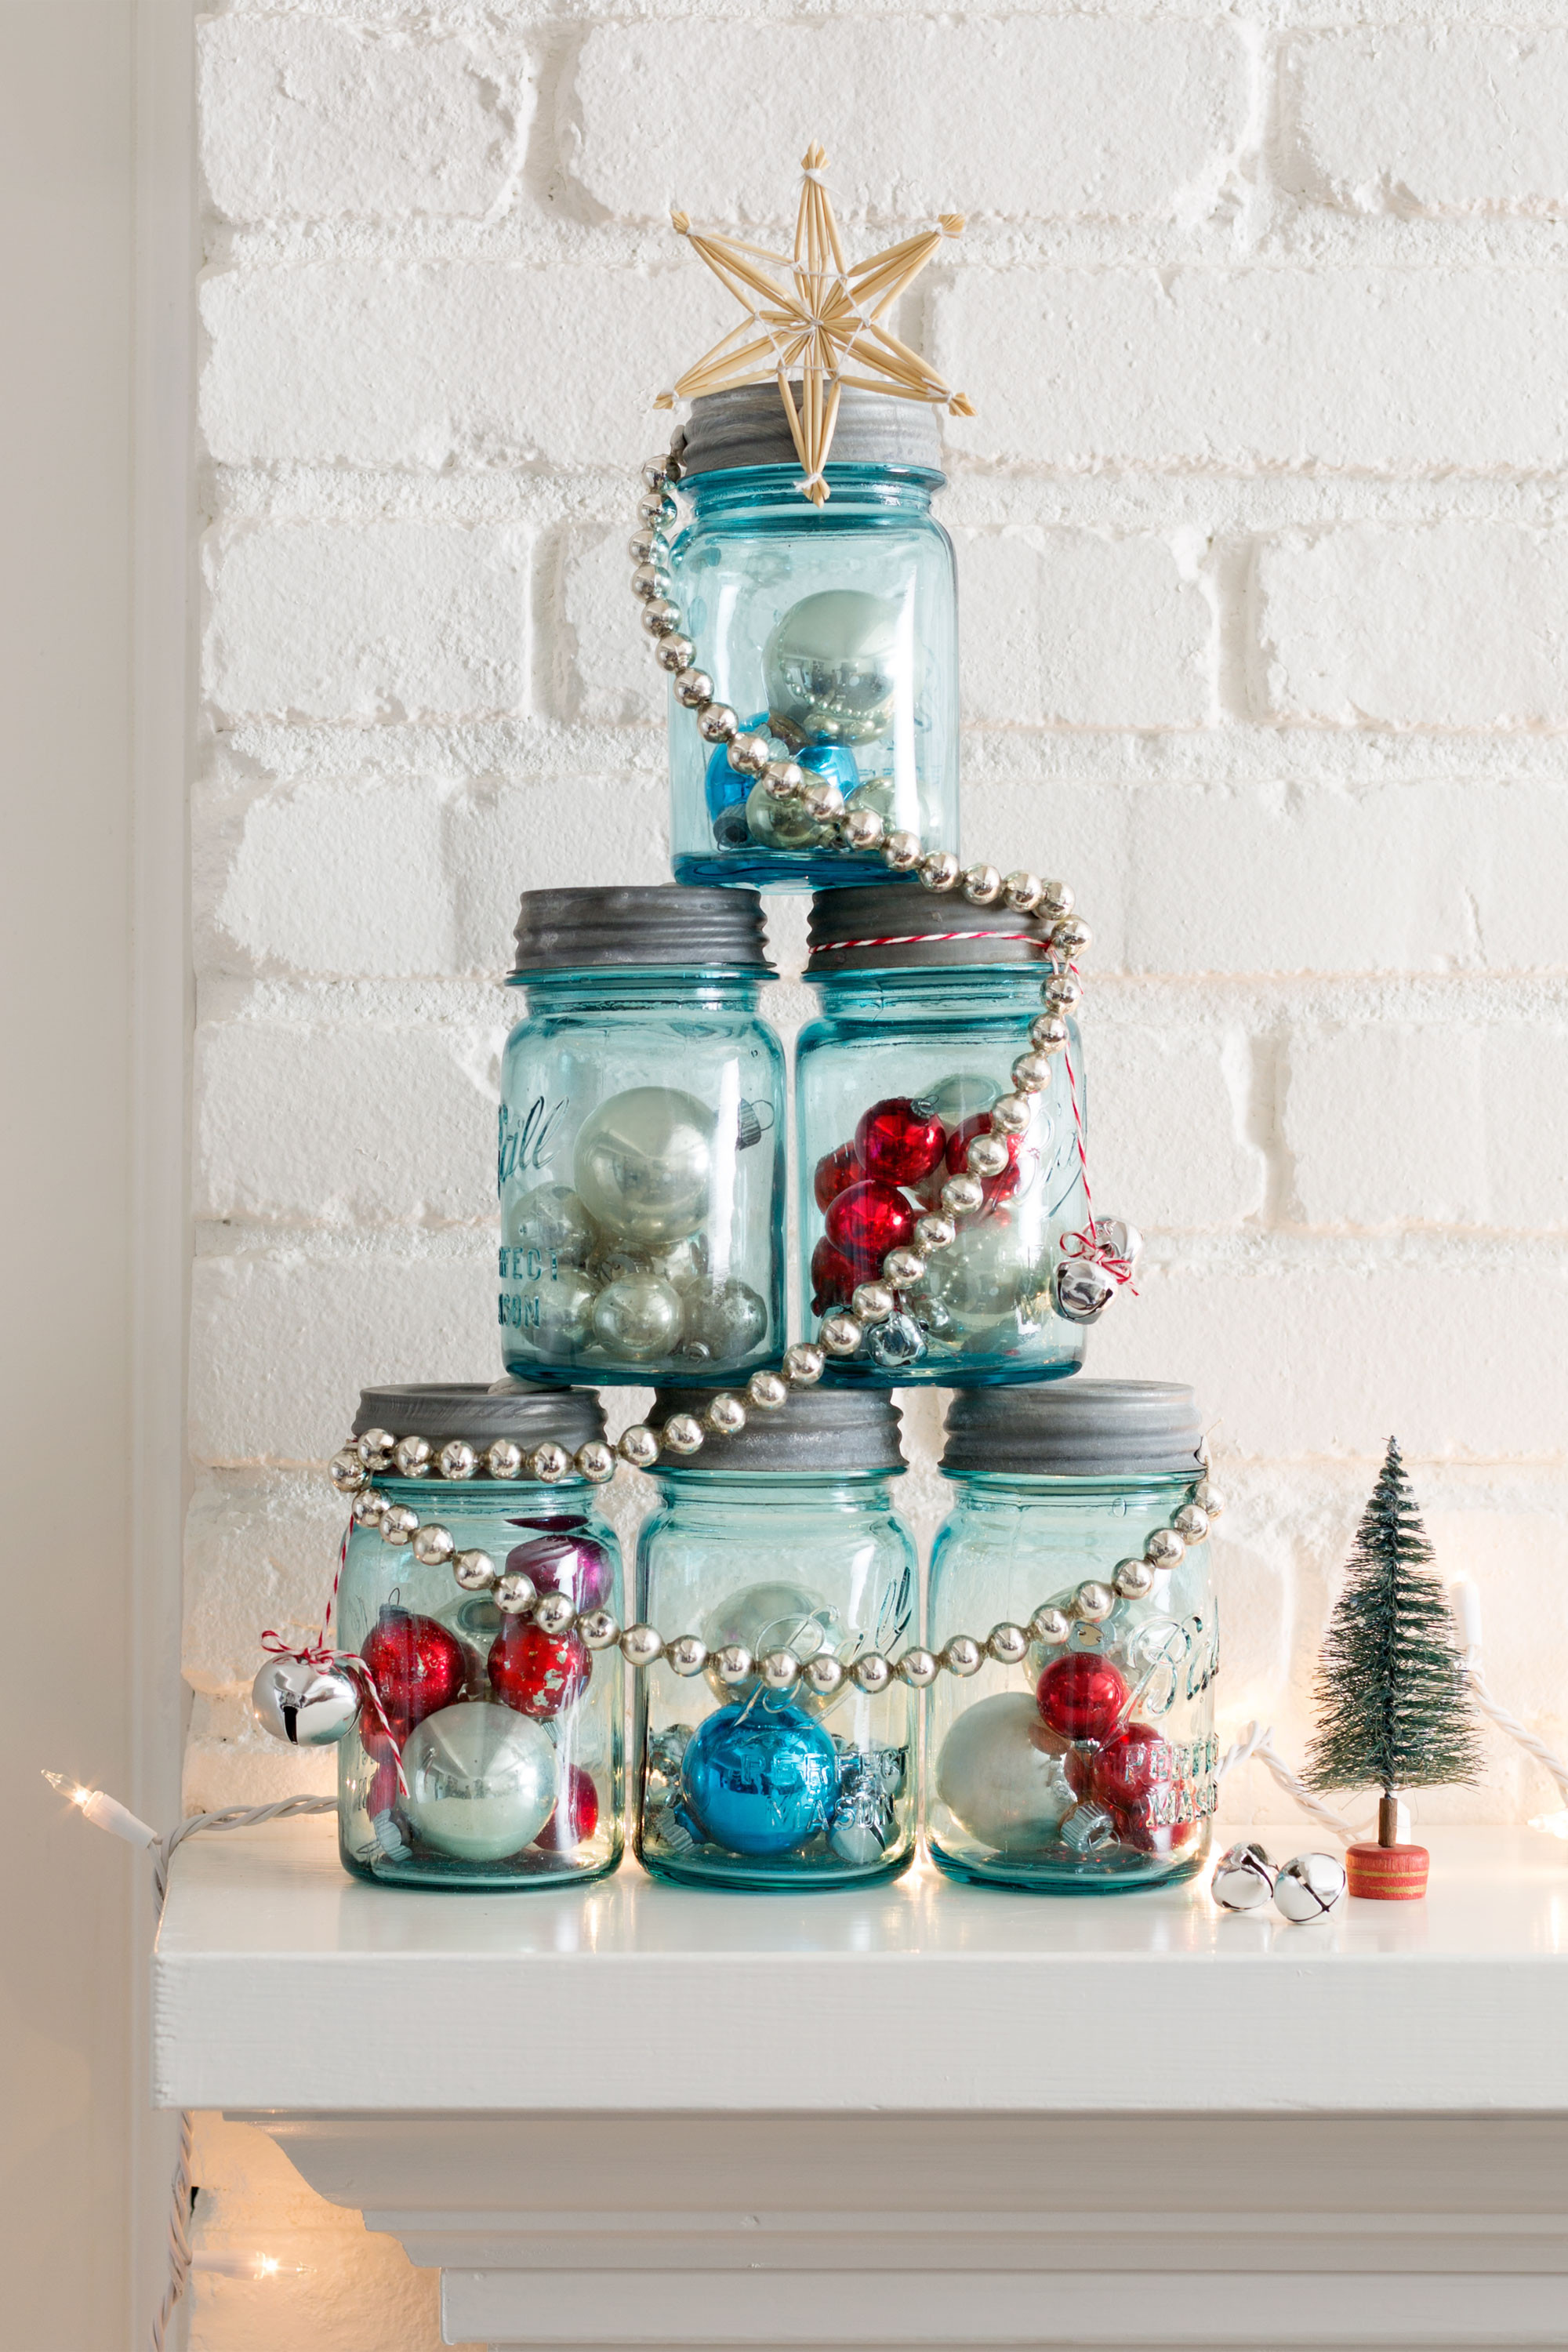 Best ideas about DIY Christmas Decorations
. Save or Pin 37 DIY Homemade Christmas Decorations Christmas Decor Now.